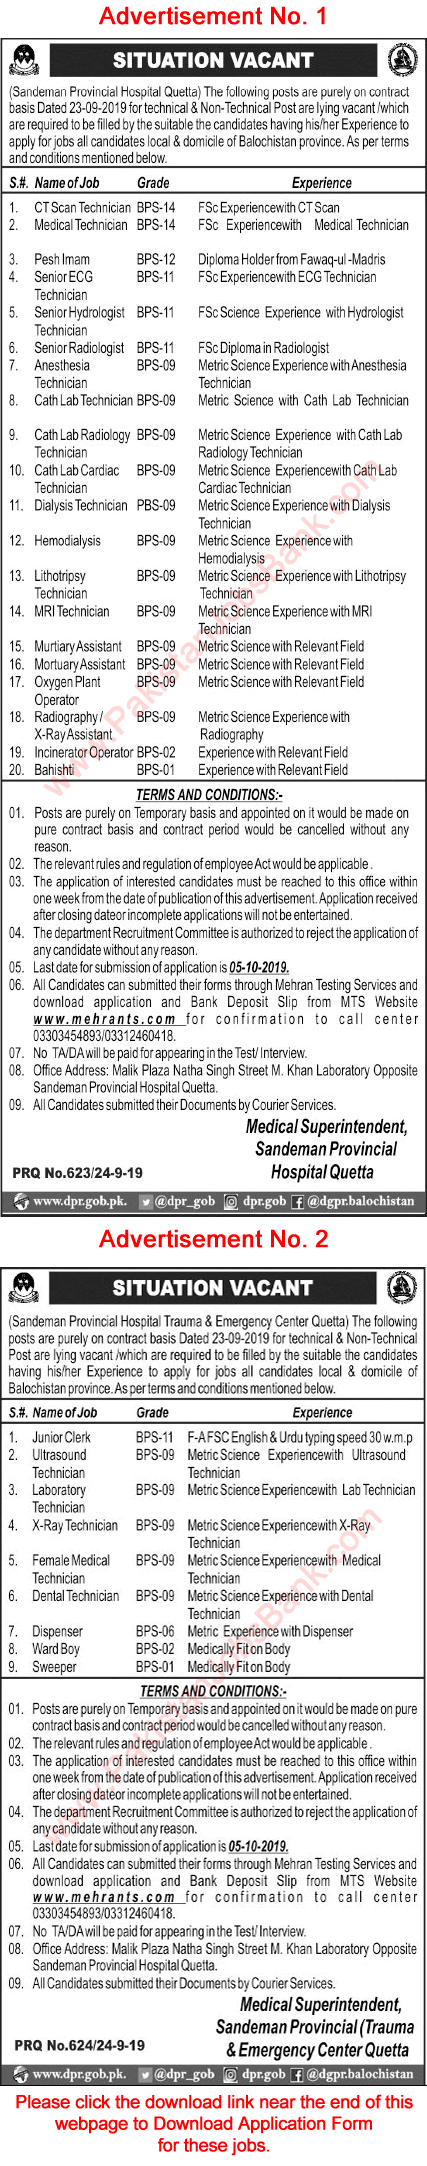 Sandeman Provincial Hospital Quetta Jobs 2019 September MTS Application Form Medical Technicians & Others Latest